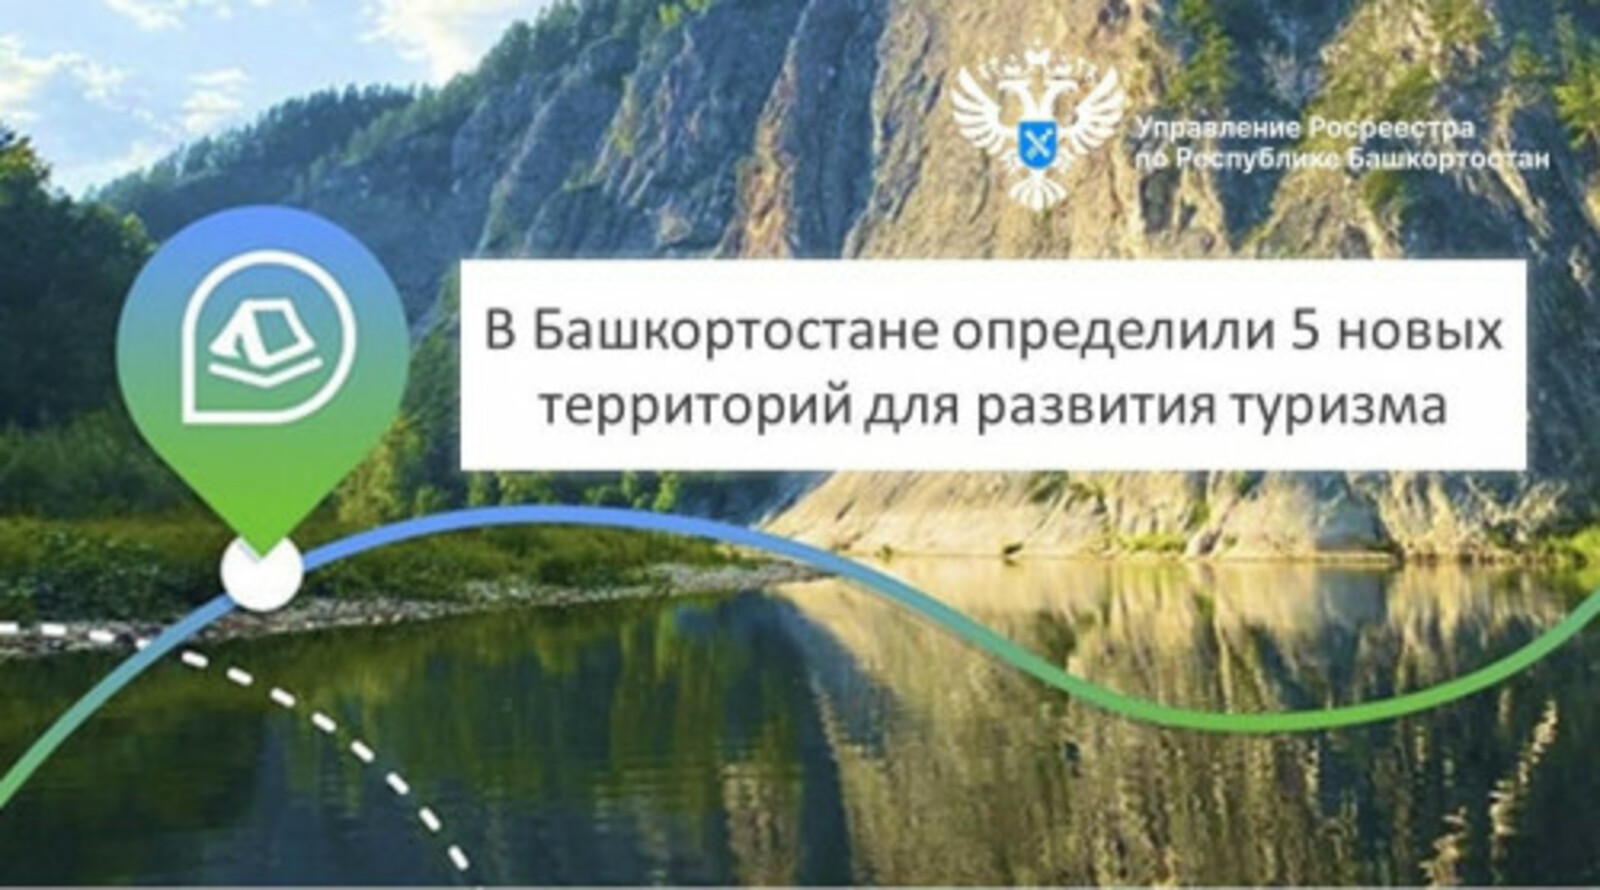 В Башкортостане определили пять территорий для развития туризма